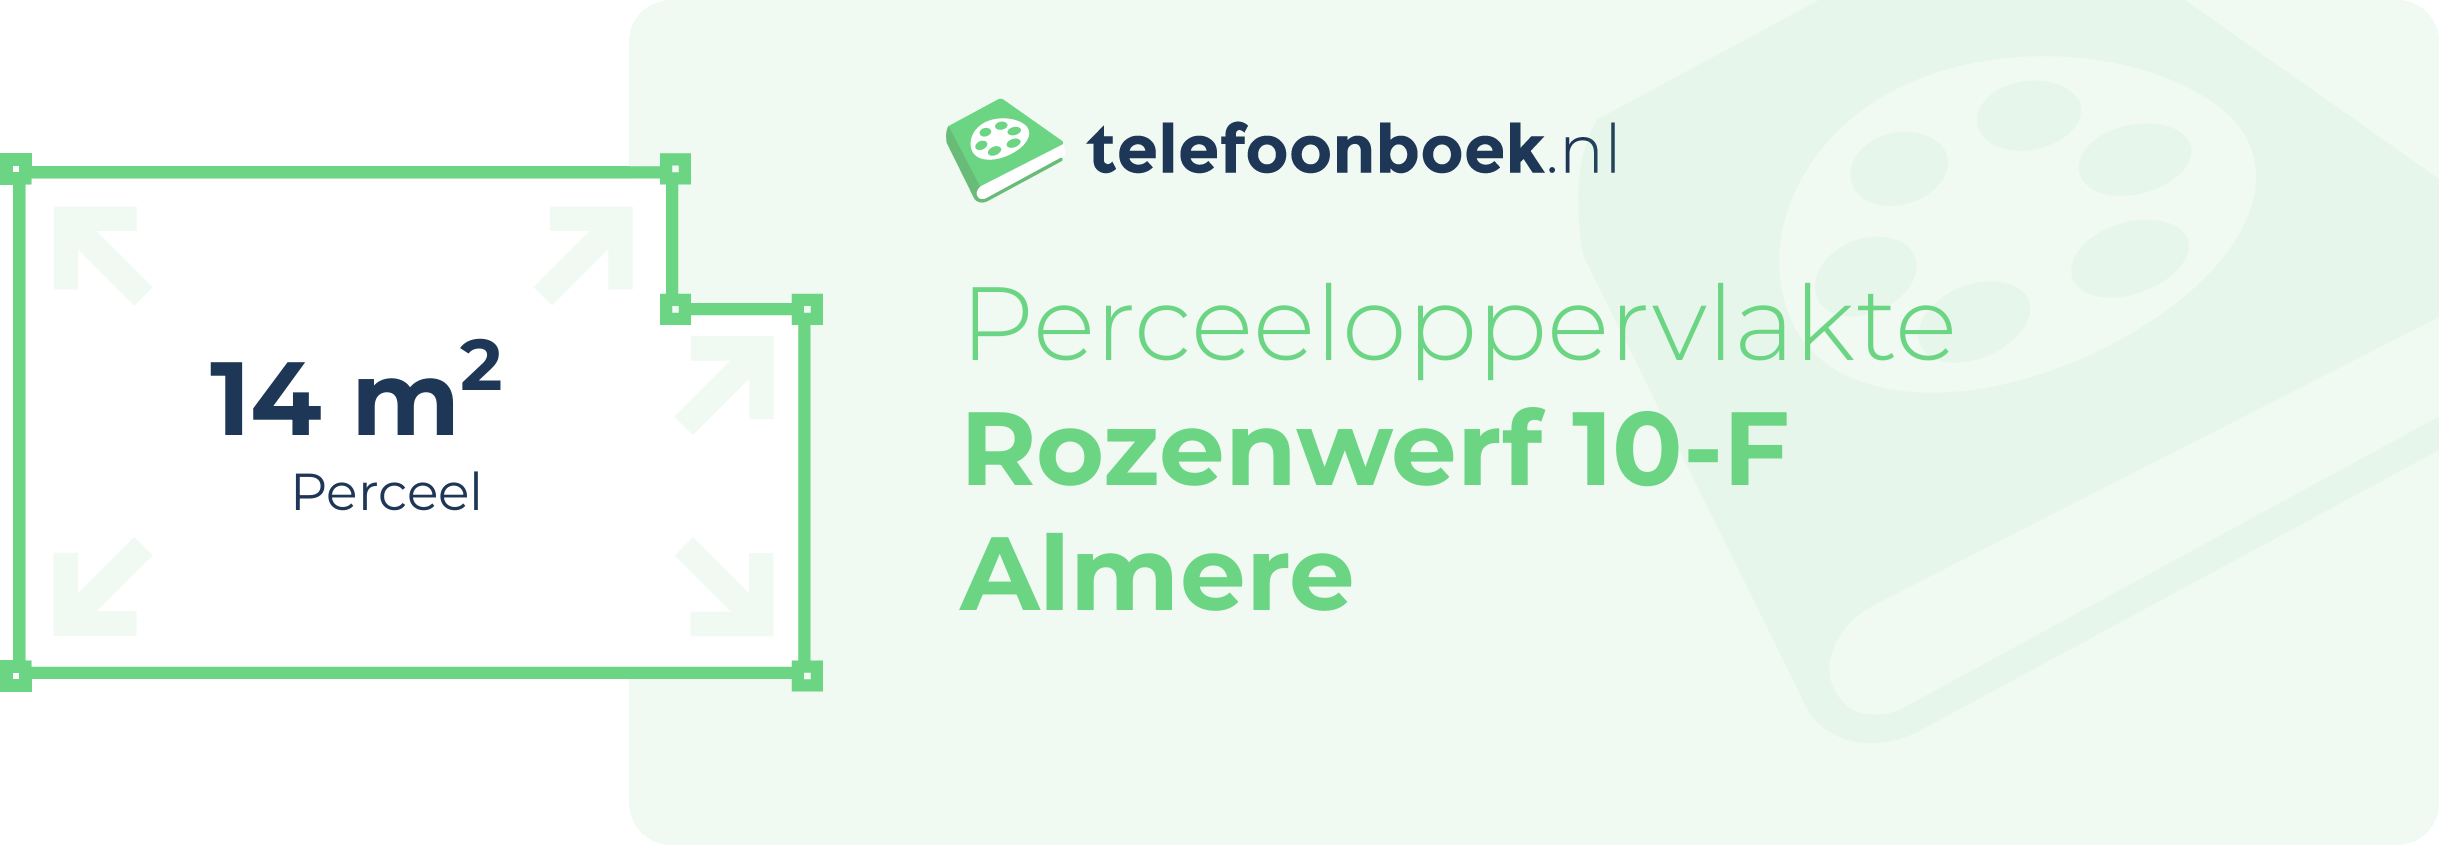 Perceeloppervlakte Rozenwerf 10-F Almere